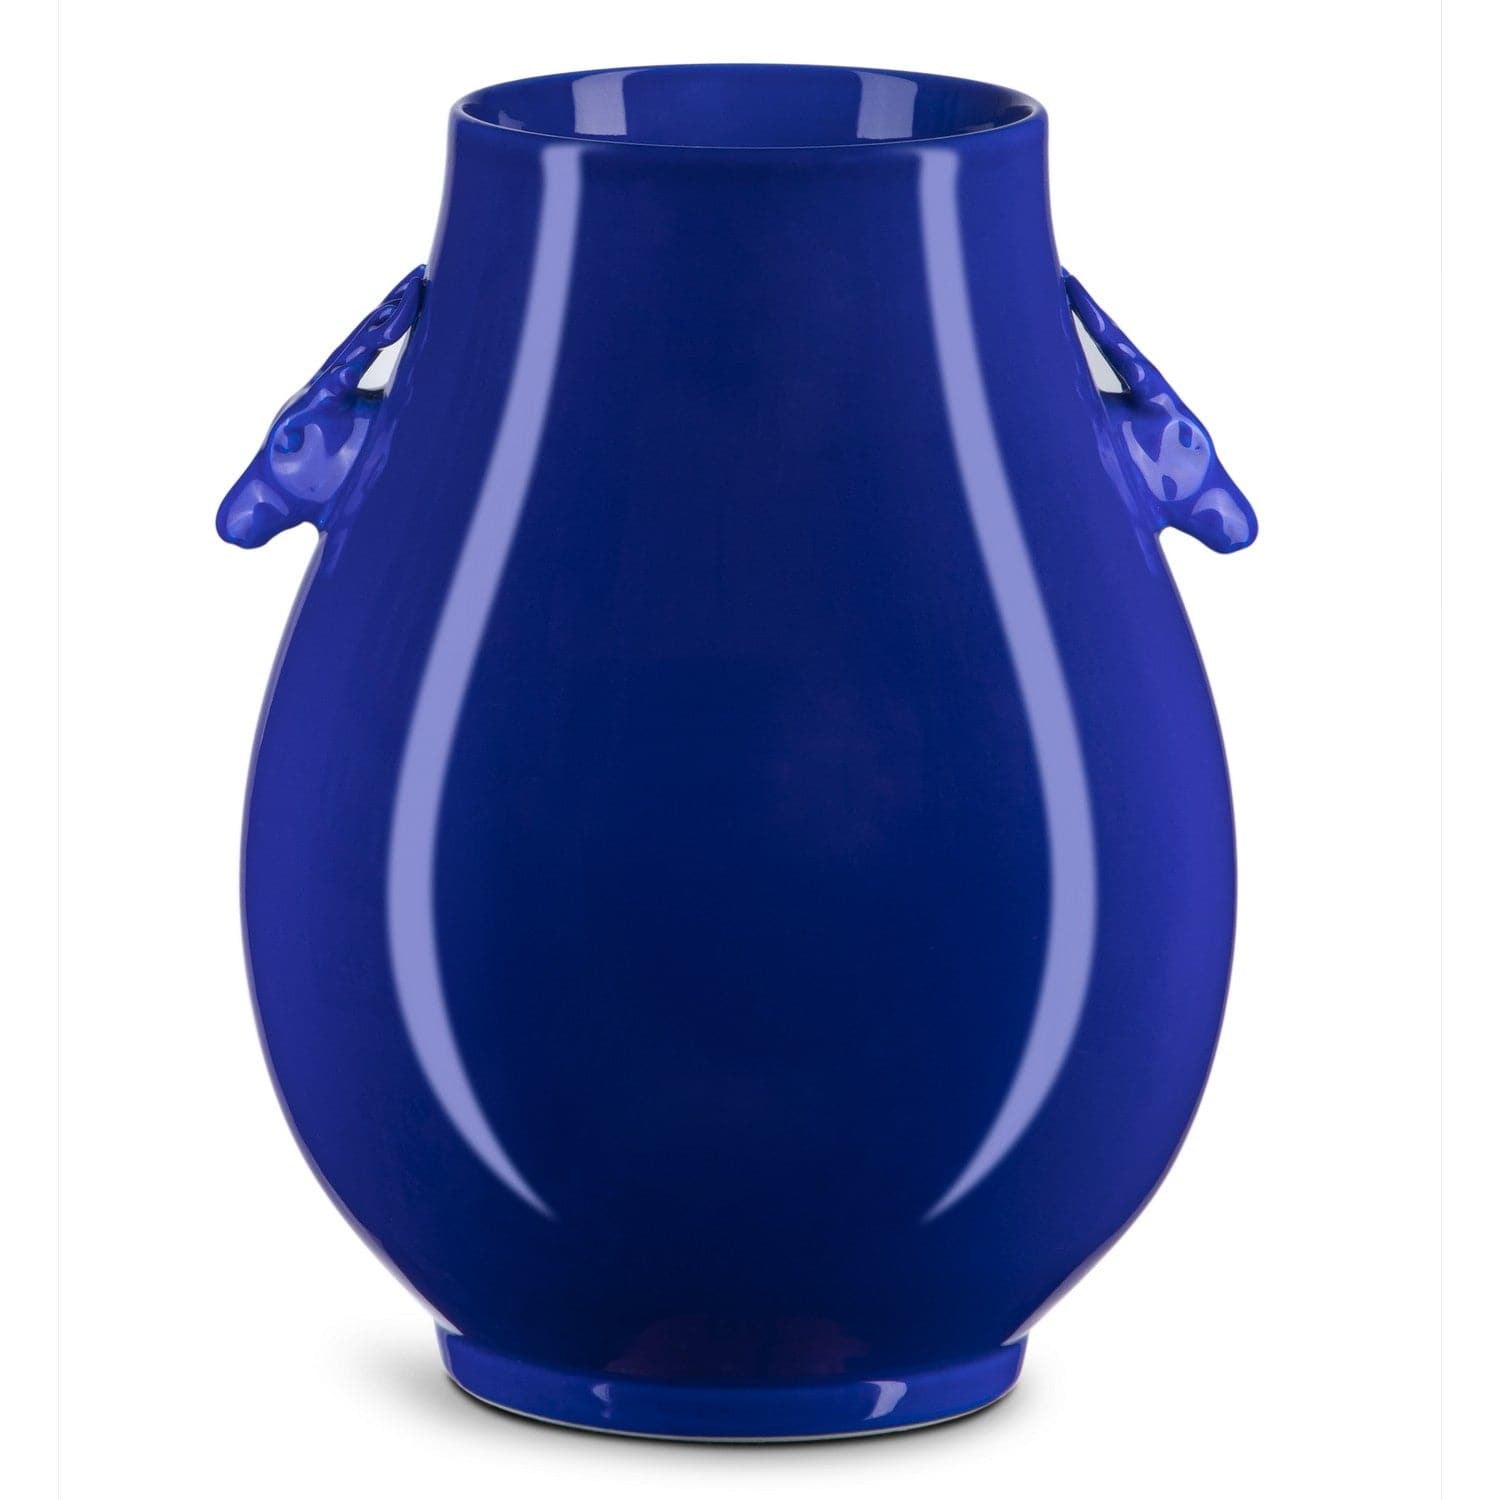 Currey and Company - 1200-0701 - Vase - Ocean Blue